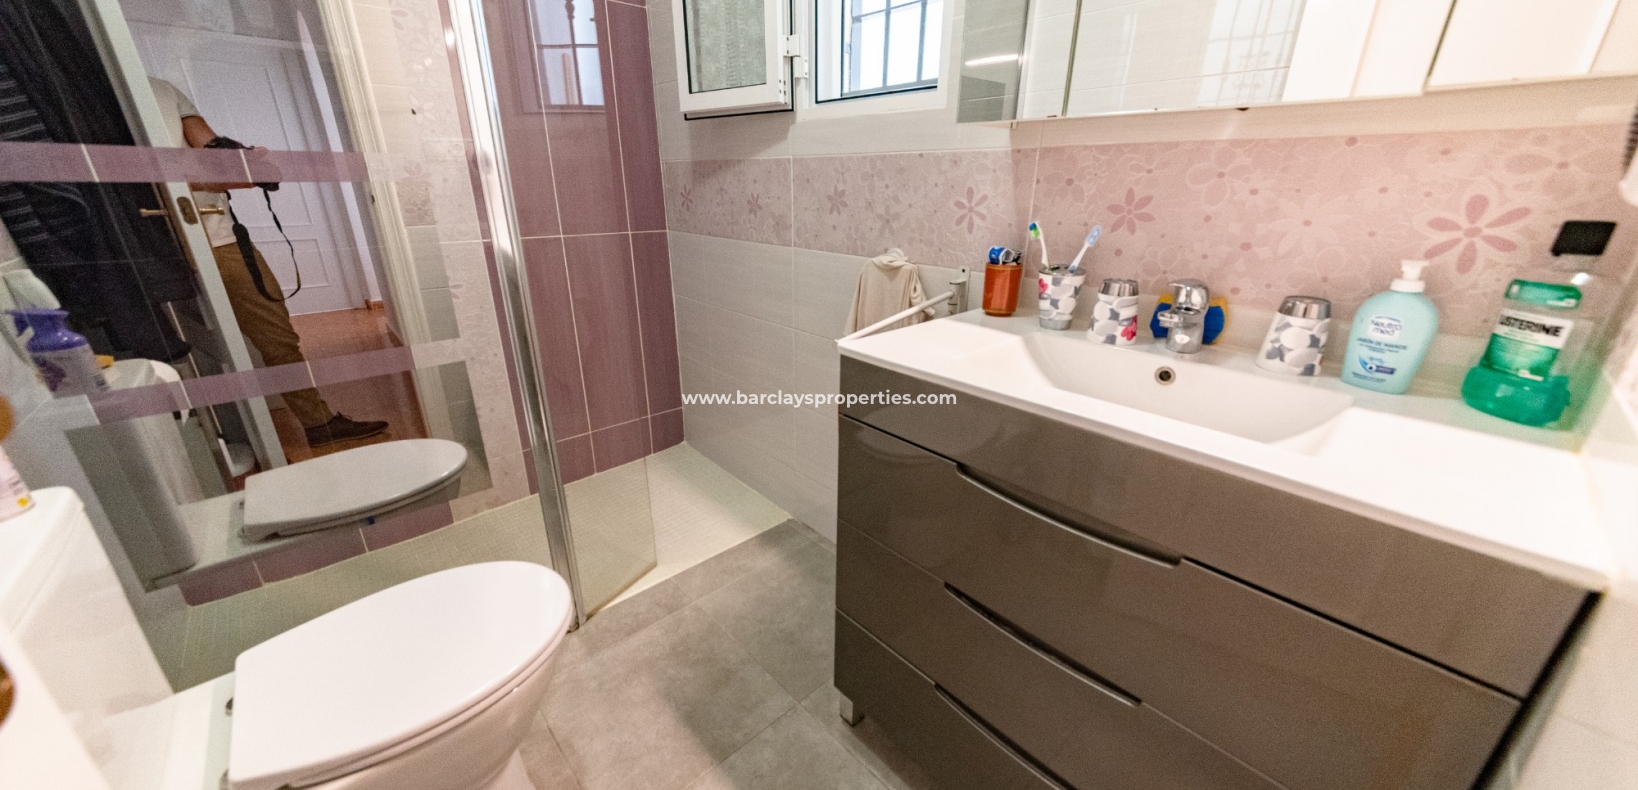 Quad property for sale in La Marina - Bathroom